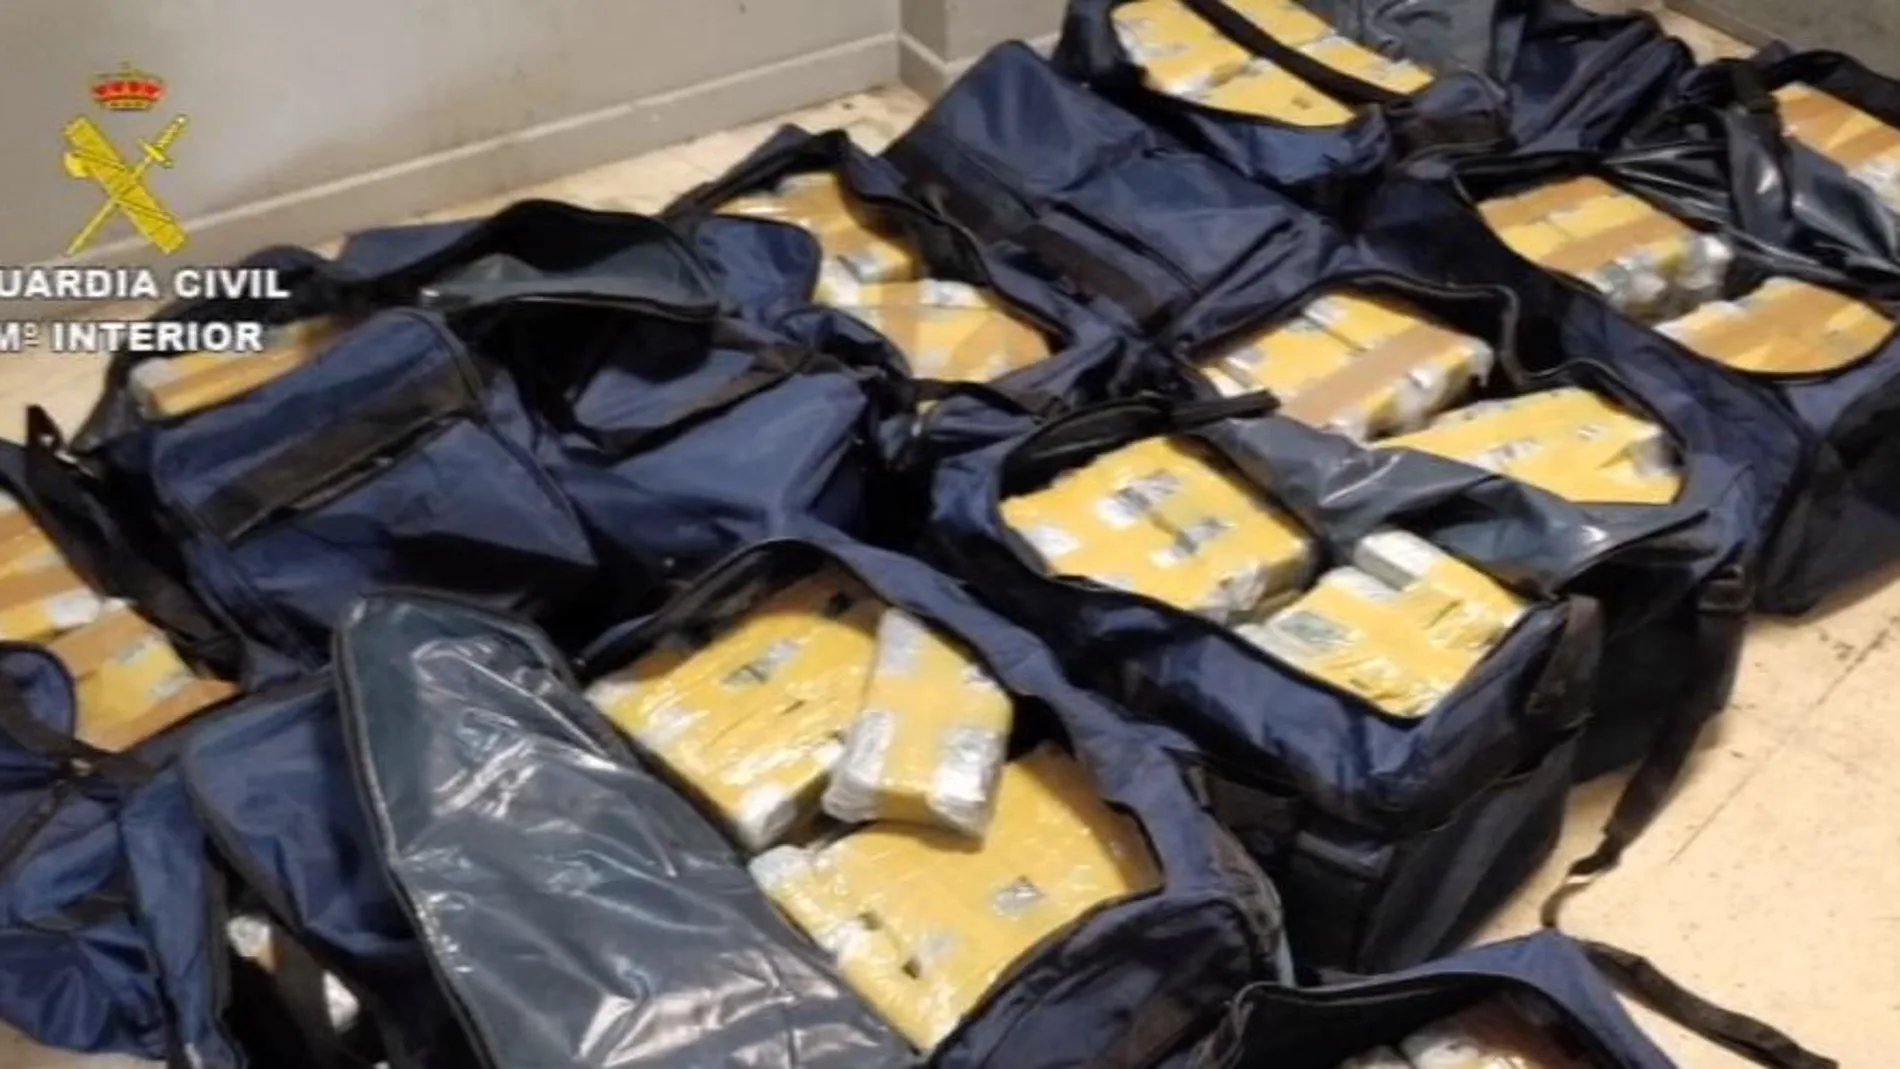 La Guardia civil ha intervenido 480 kilogramos de cocaína en el puerto de Algeciras.